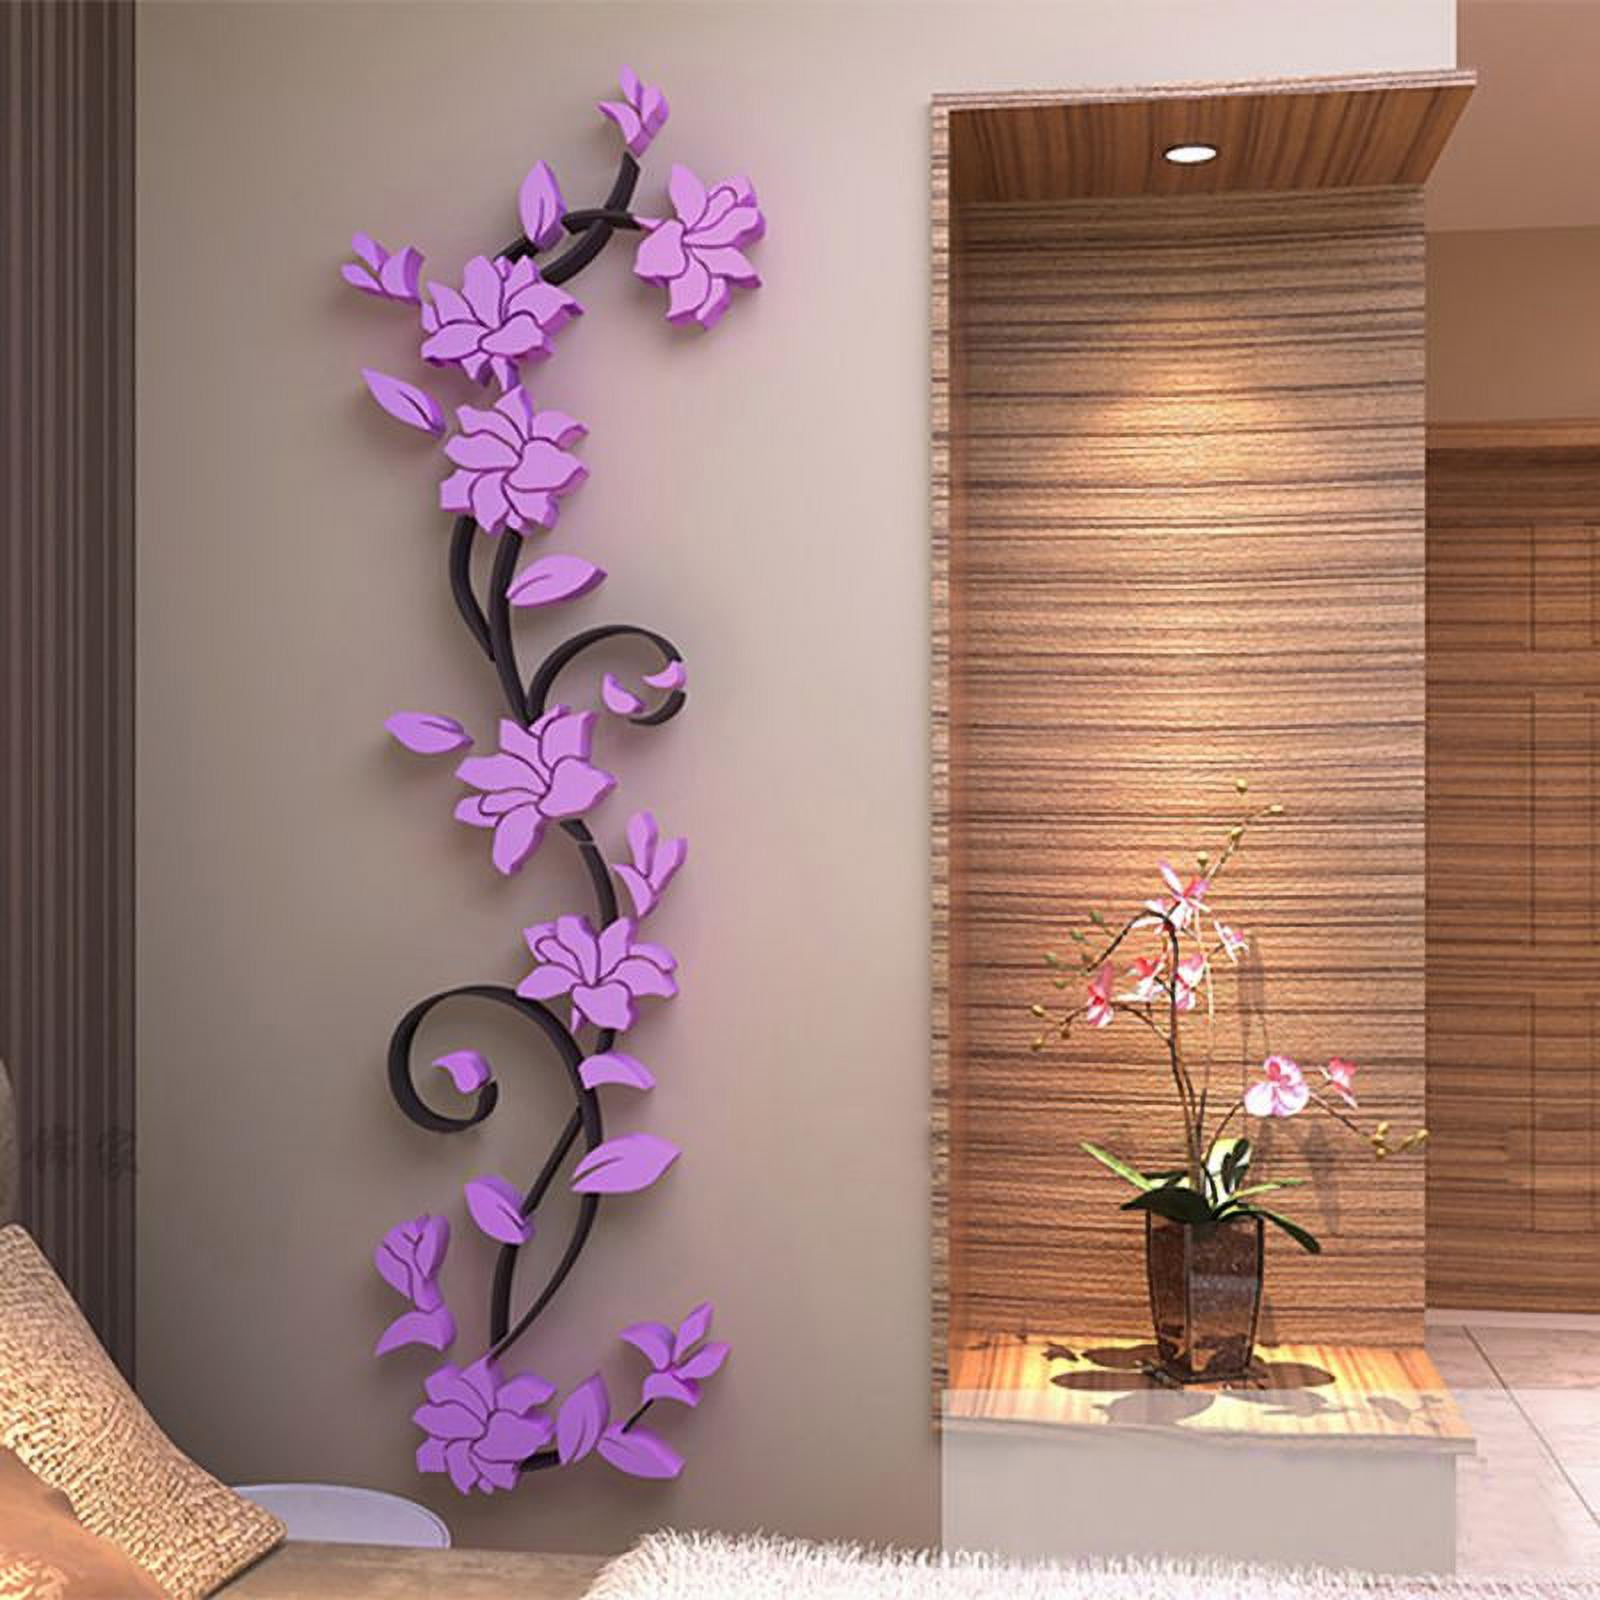 3D Flower Wall Sticker Art Mural Home Decor Vase Removable Bedroom ...